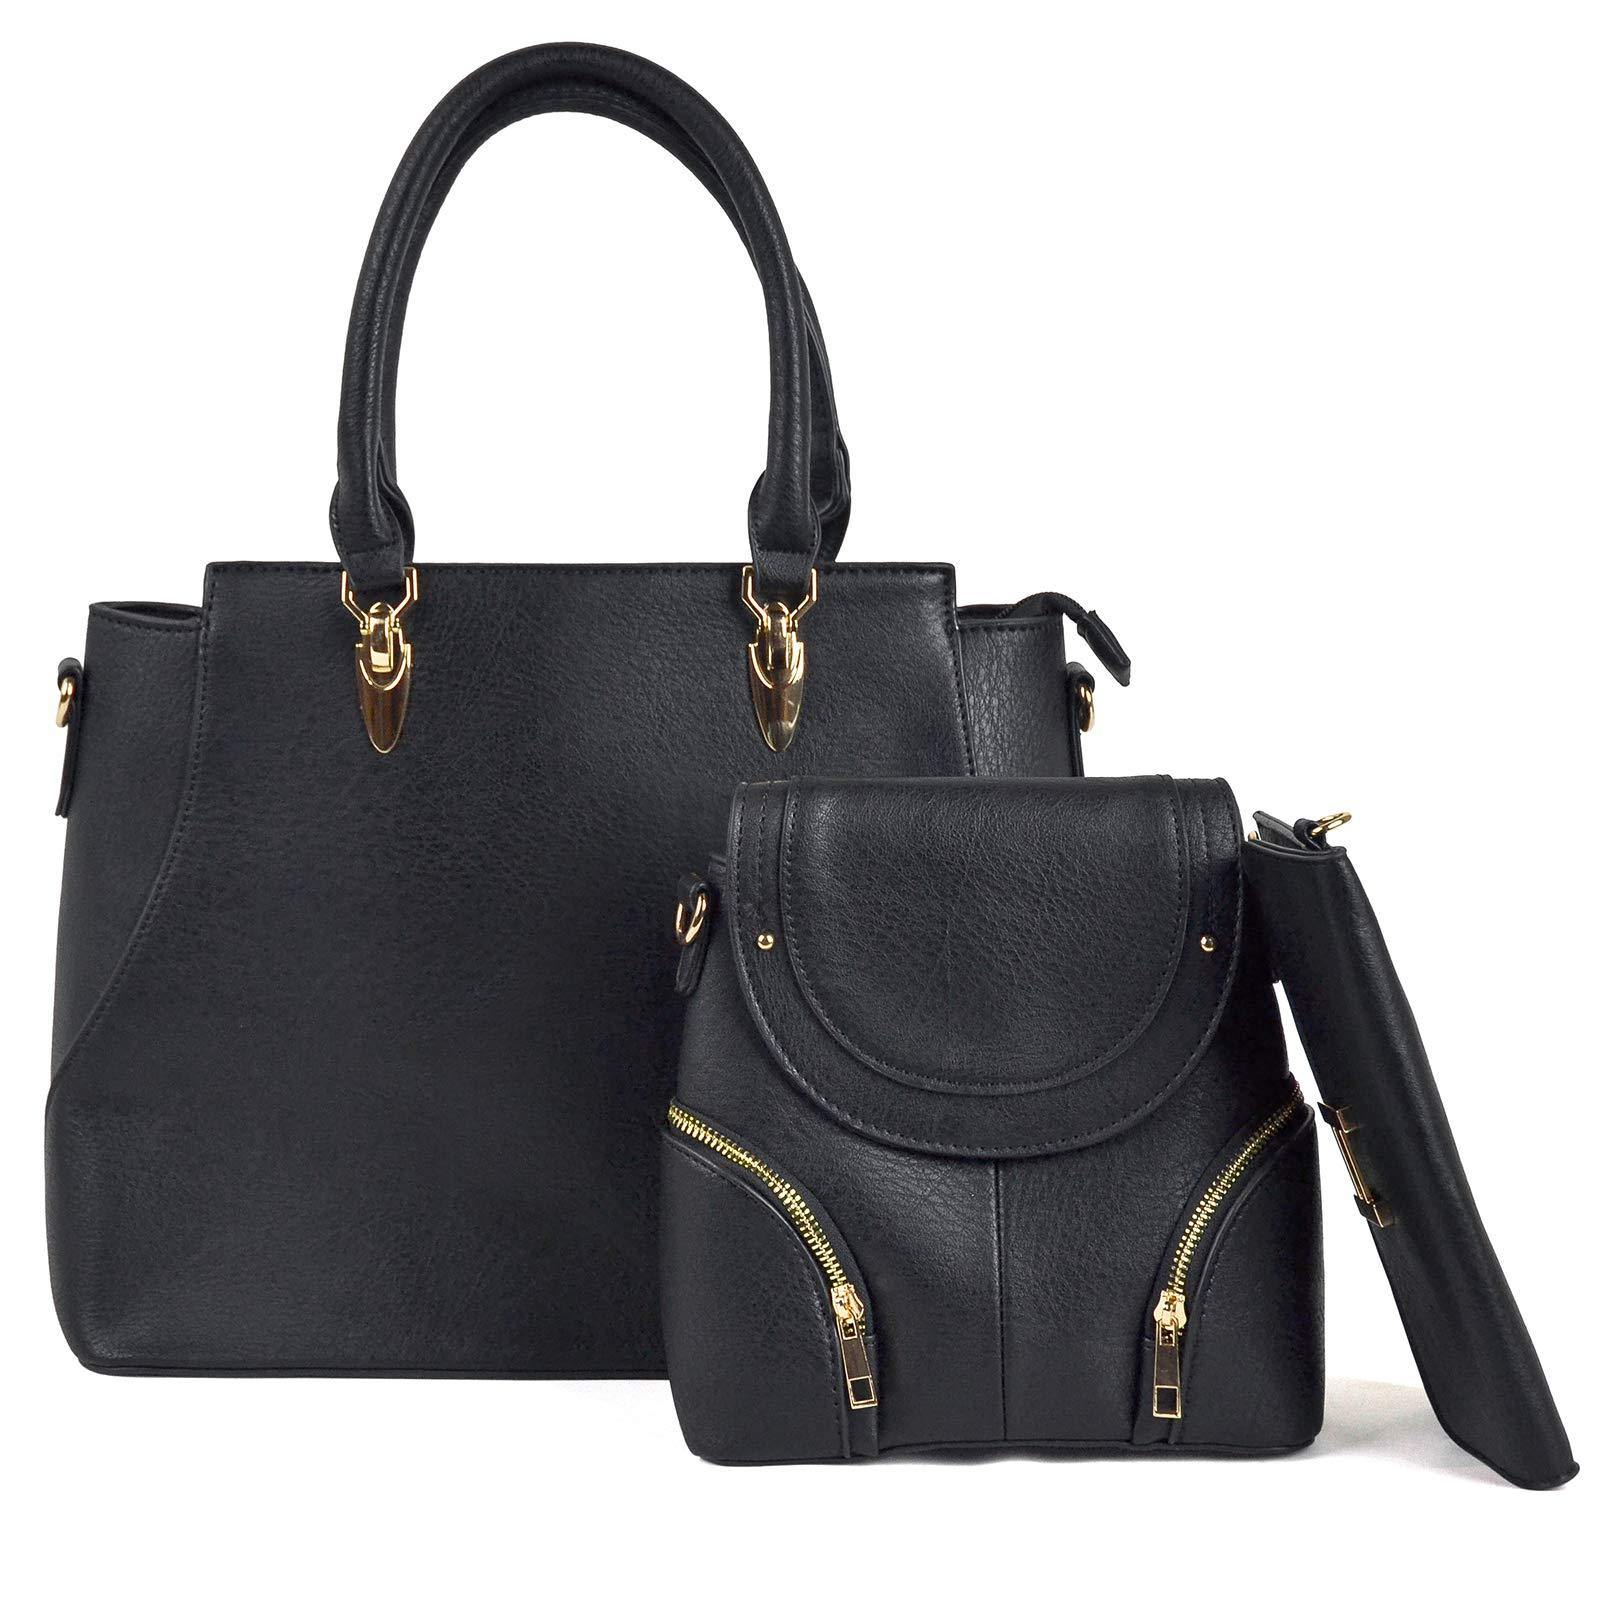 Women's Handbag | Ladies Purse | Tote Bag | Combo Set of 3 Pcs